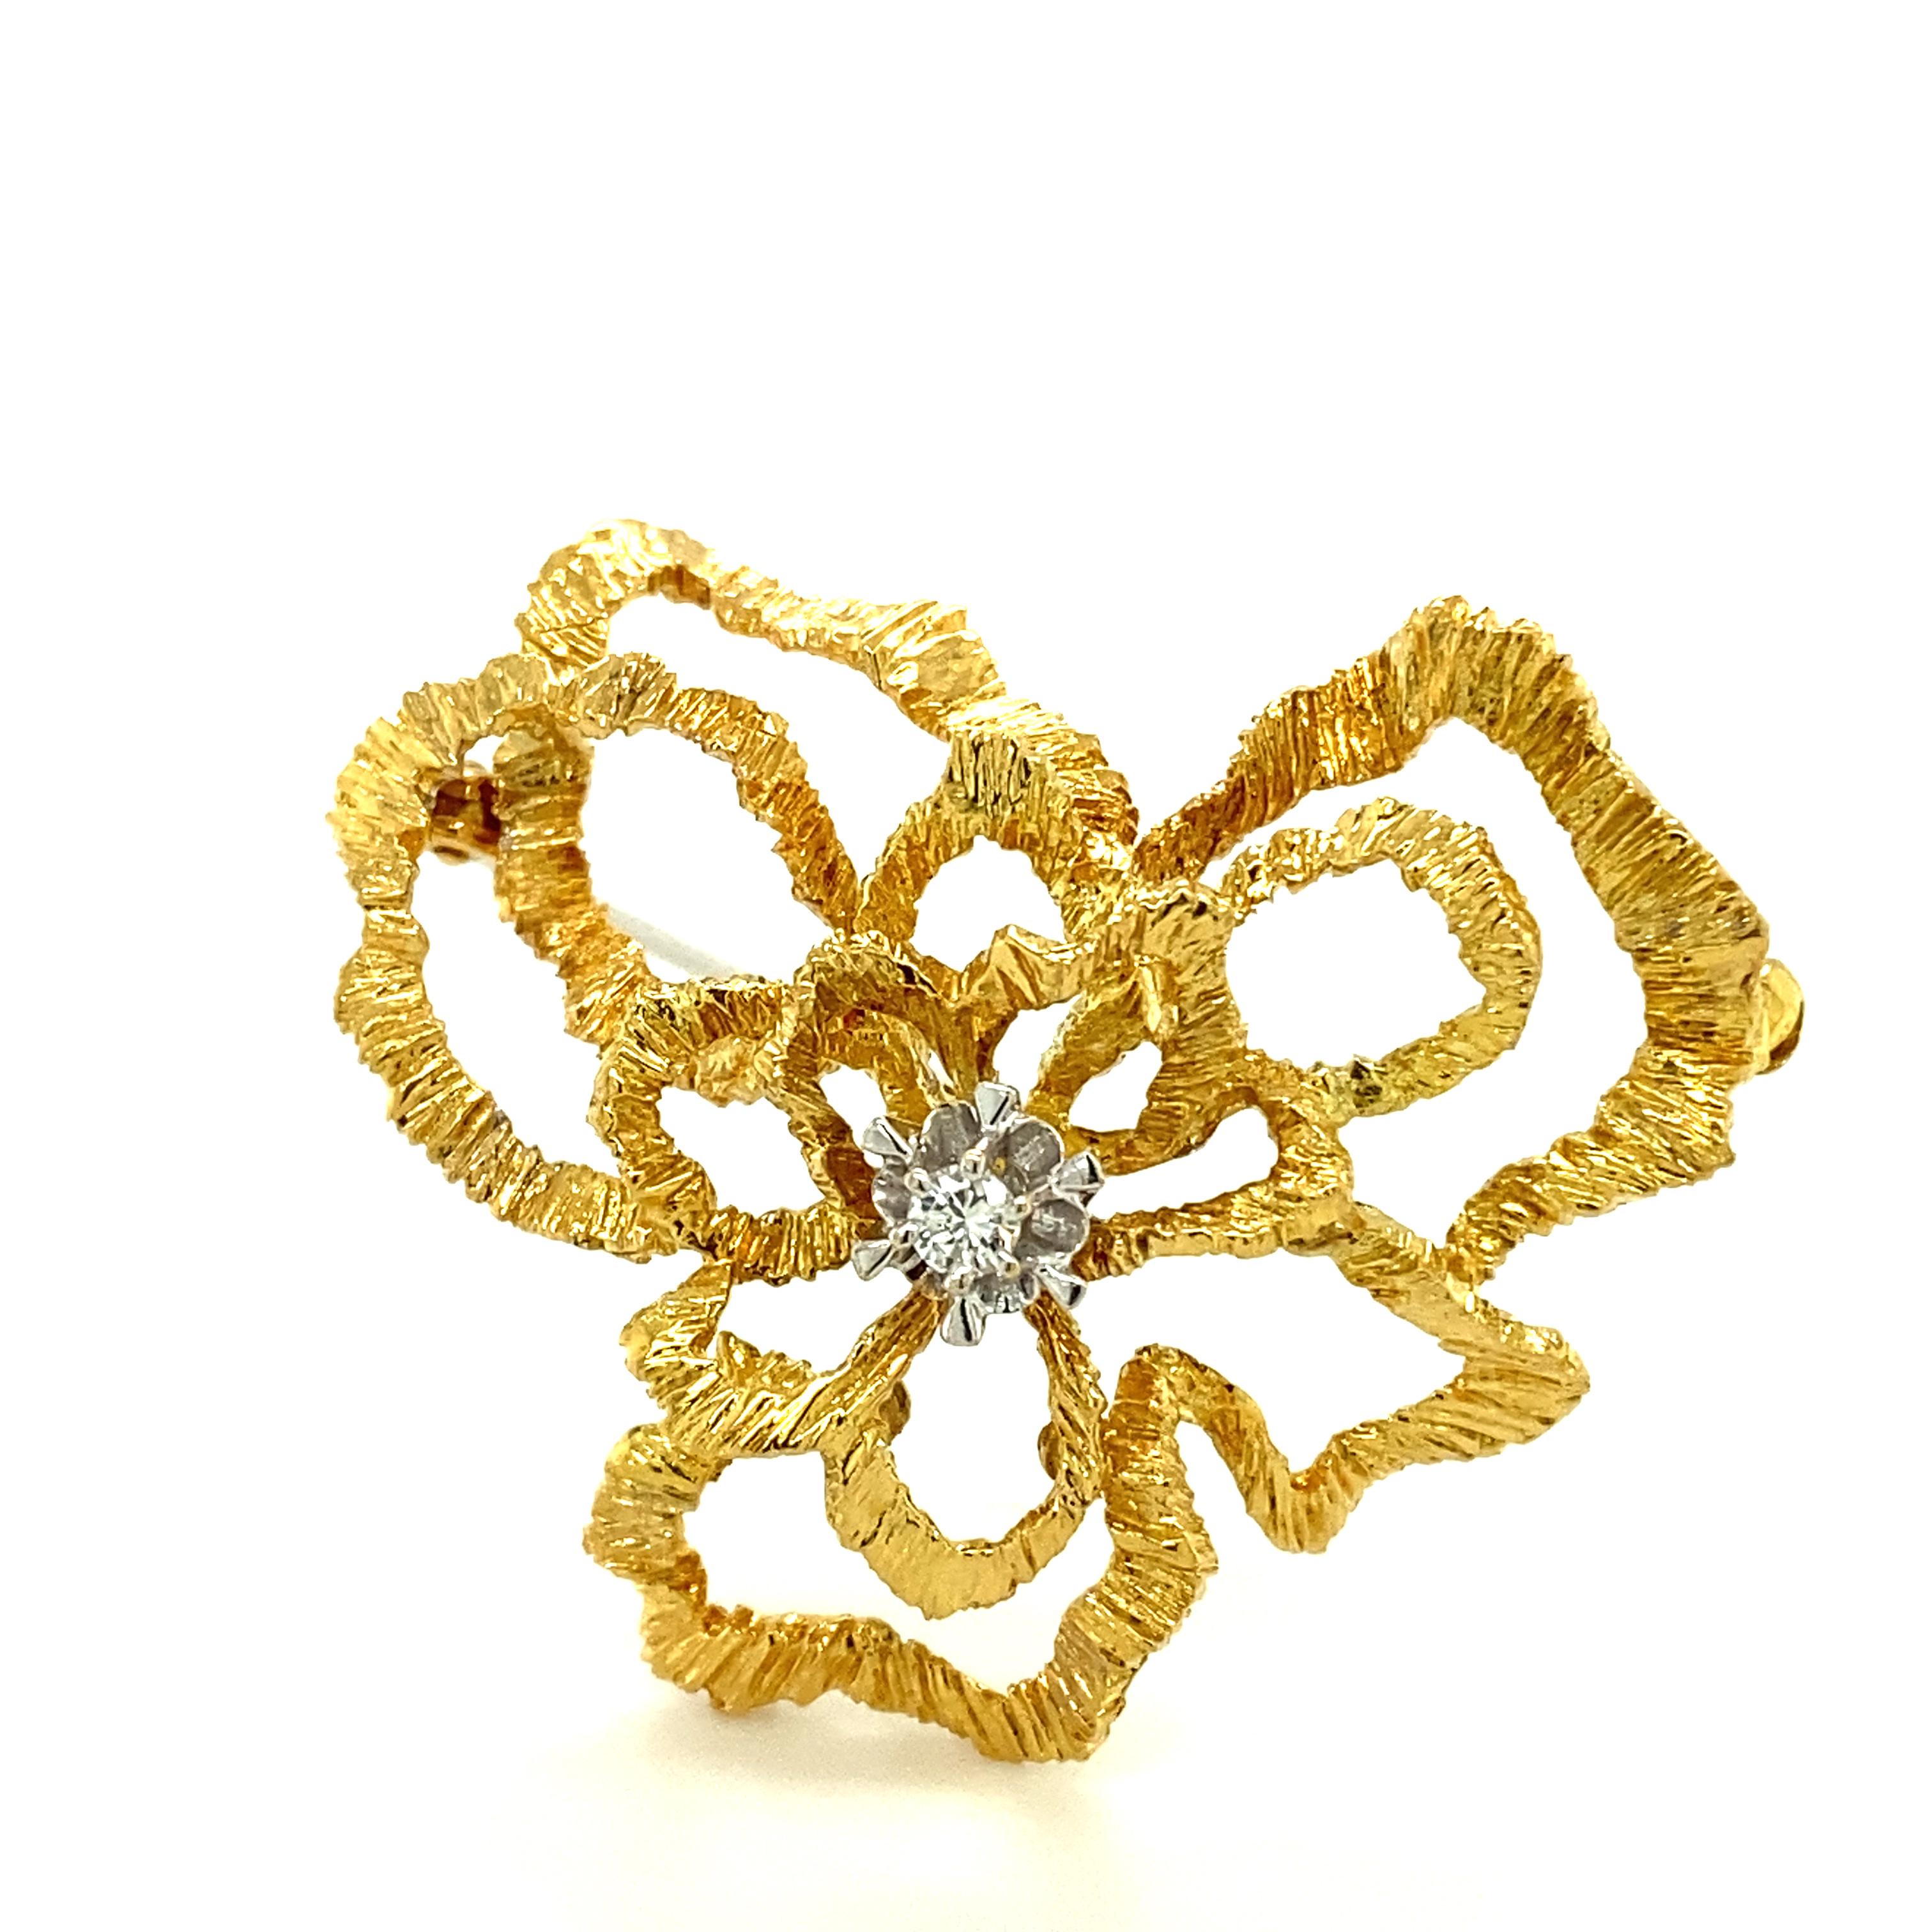 Retro Diamond Flower Brooch in 18 Karat Yellow and White Gold